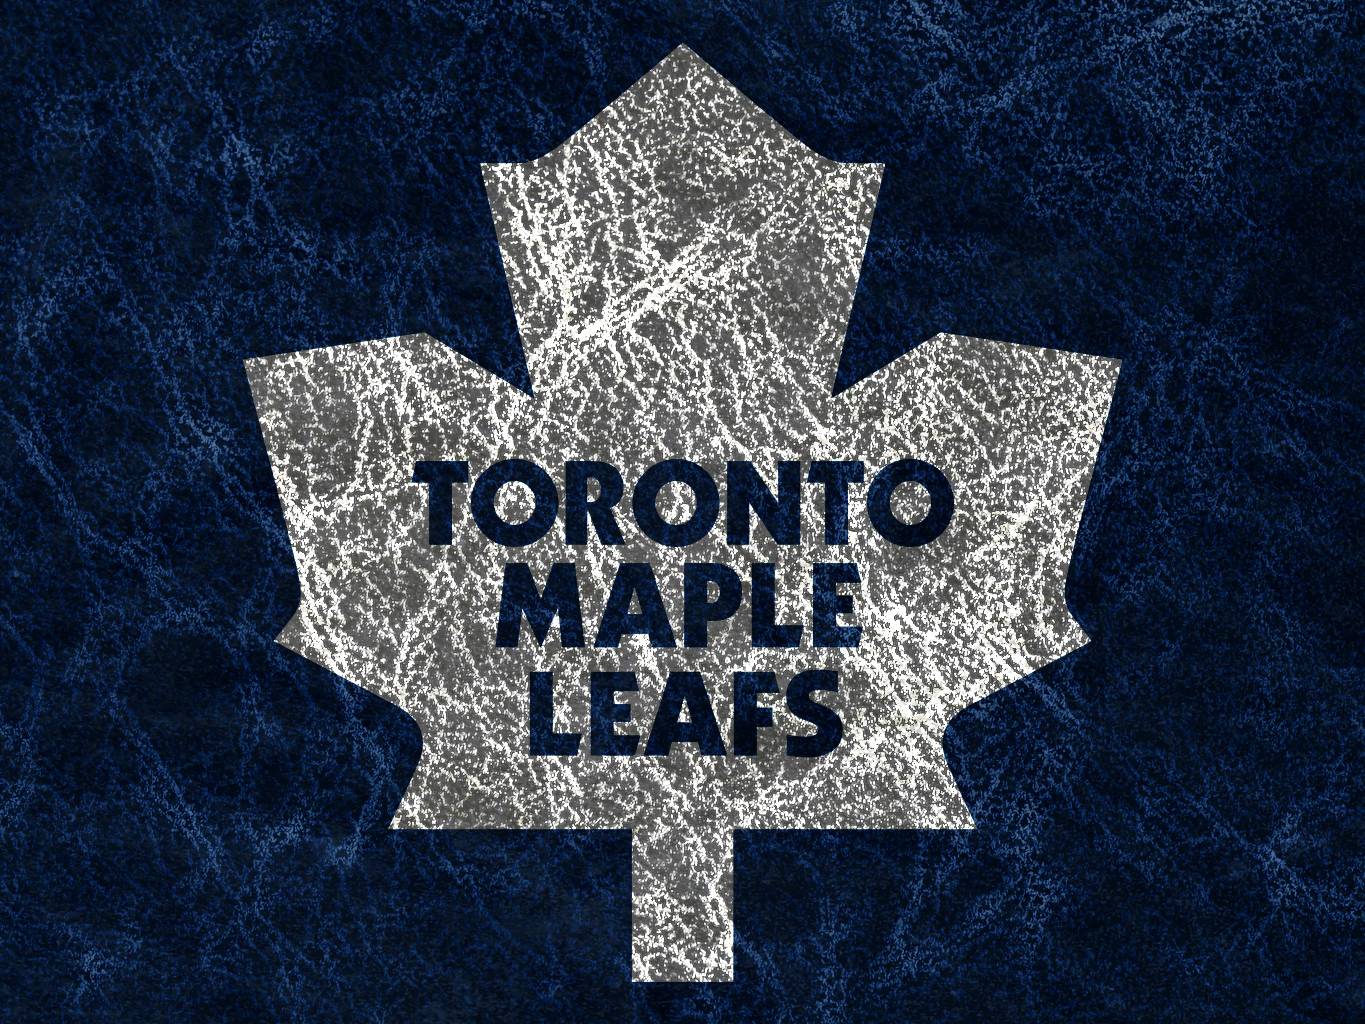 Toronto Maple Leafs wallpaper. Toronto Maple Leafs background